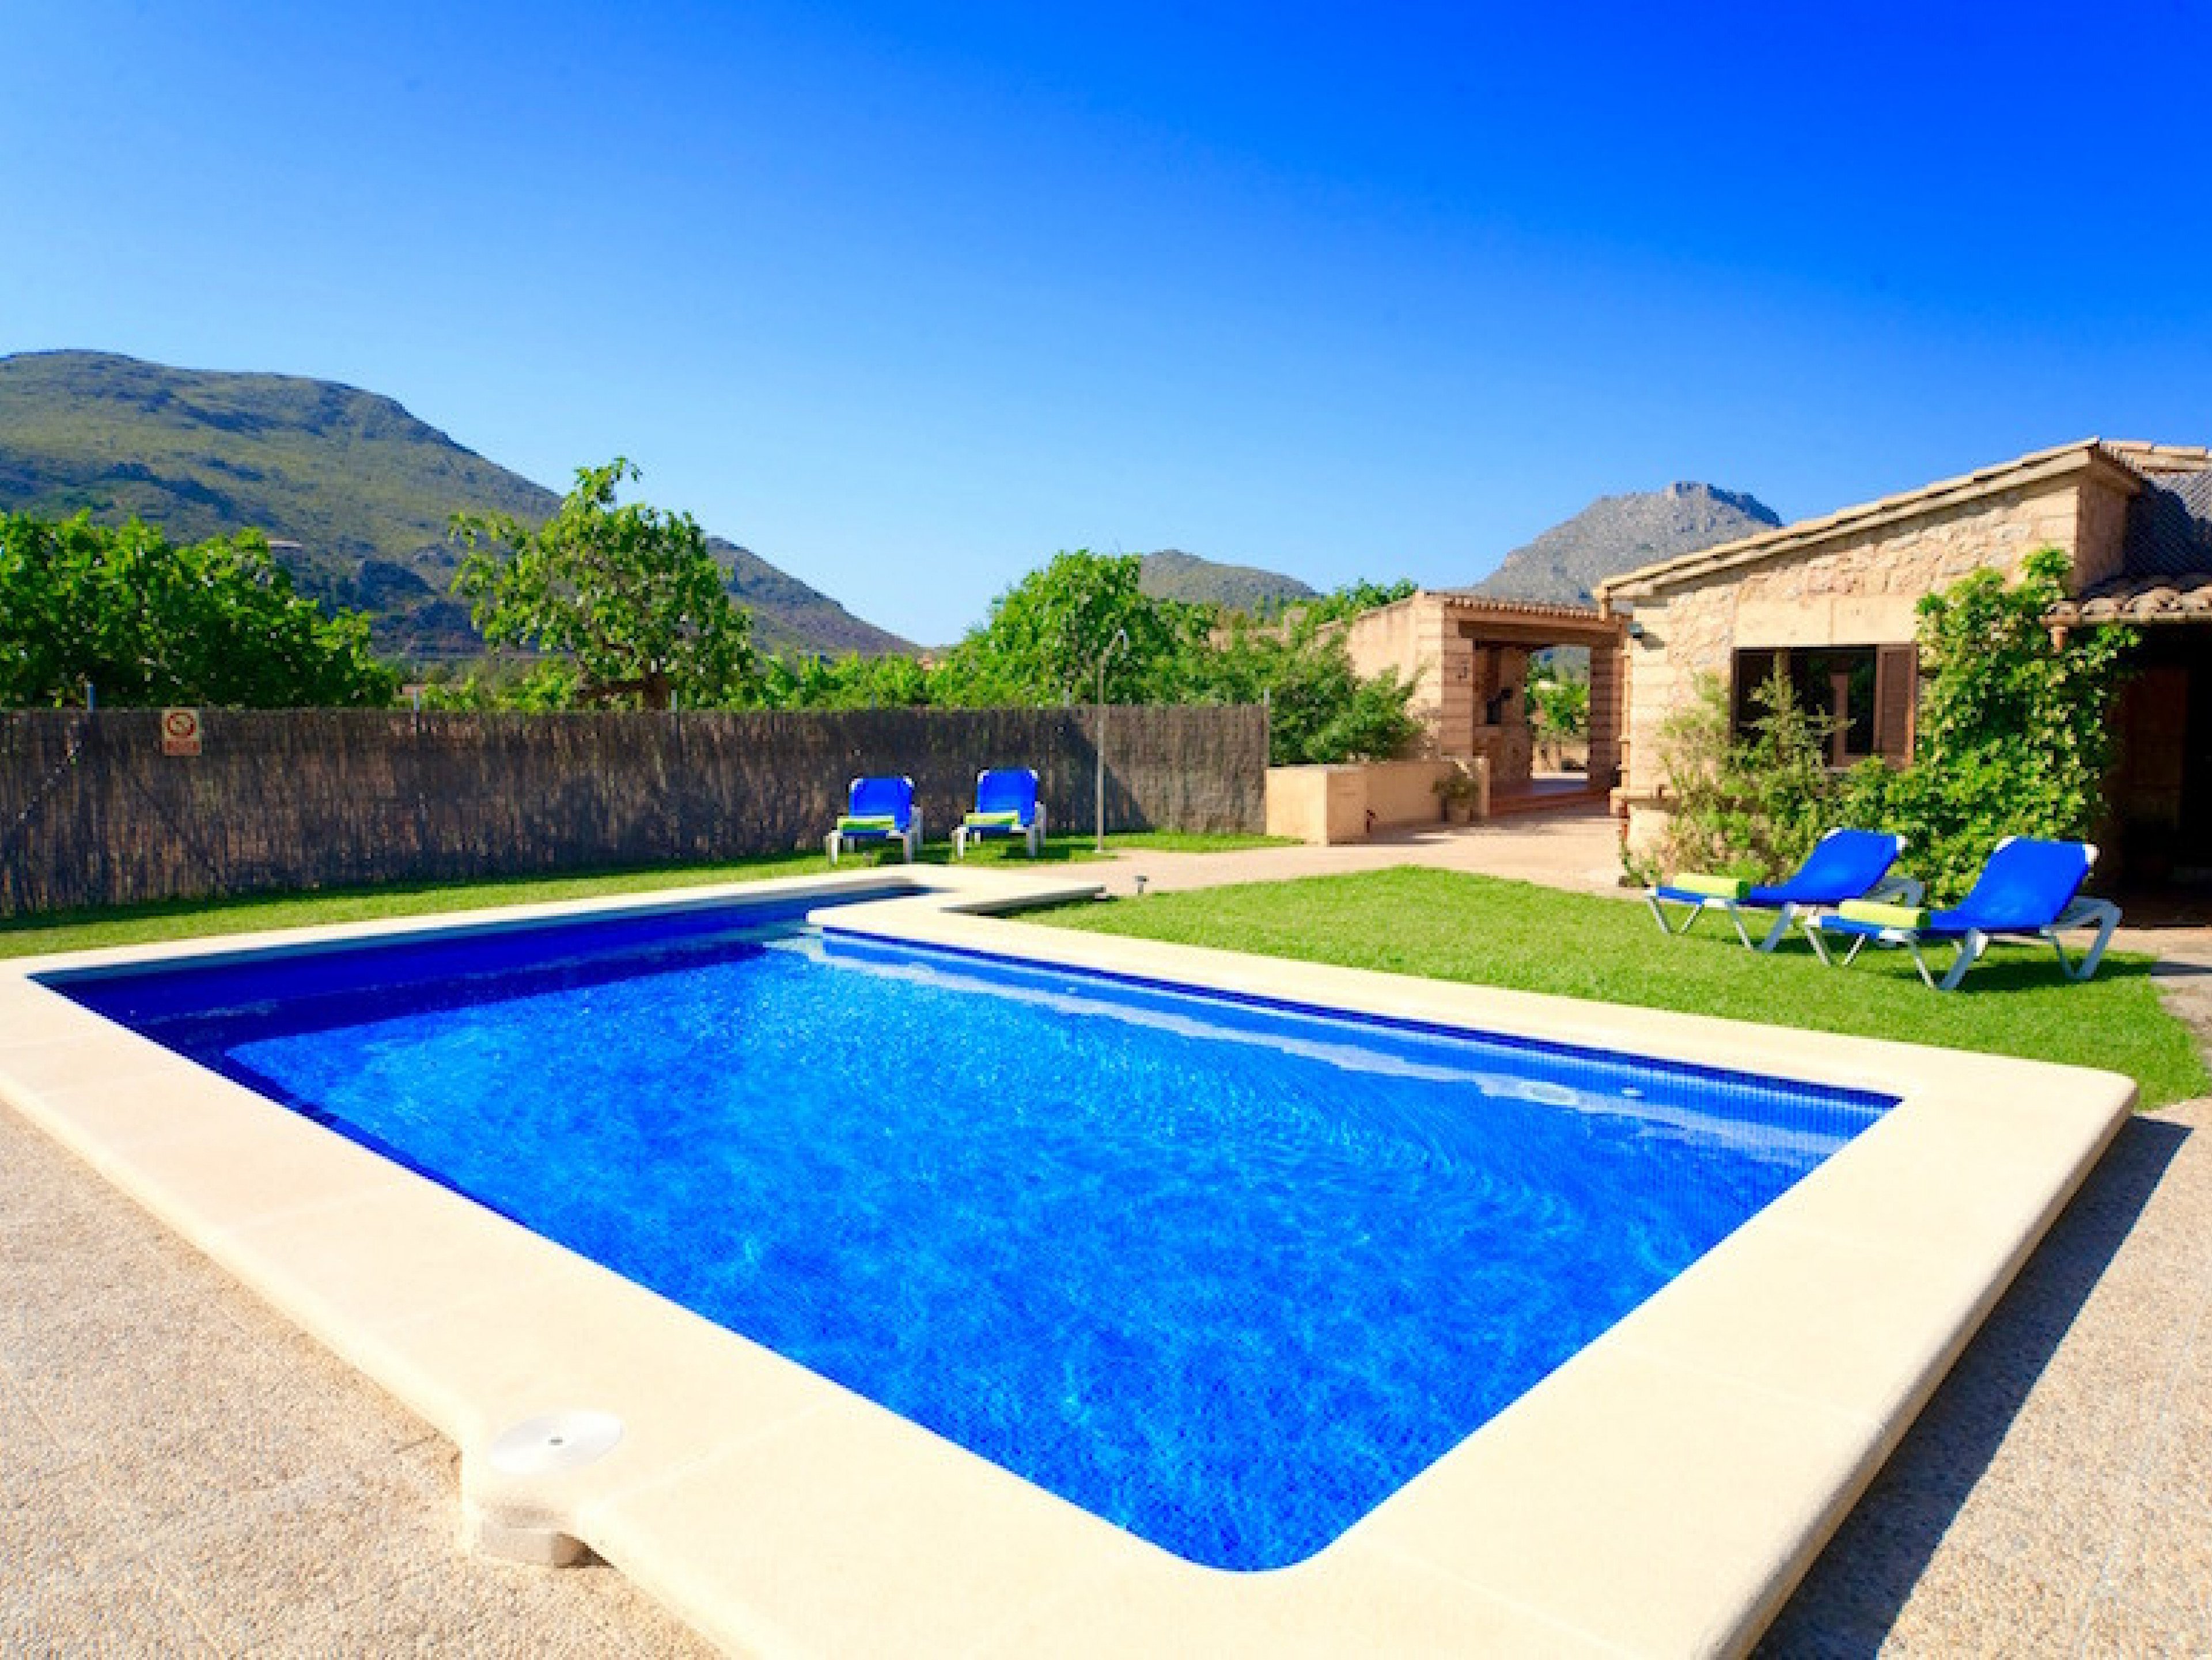 La Casita Mallorca holiday villas with pools